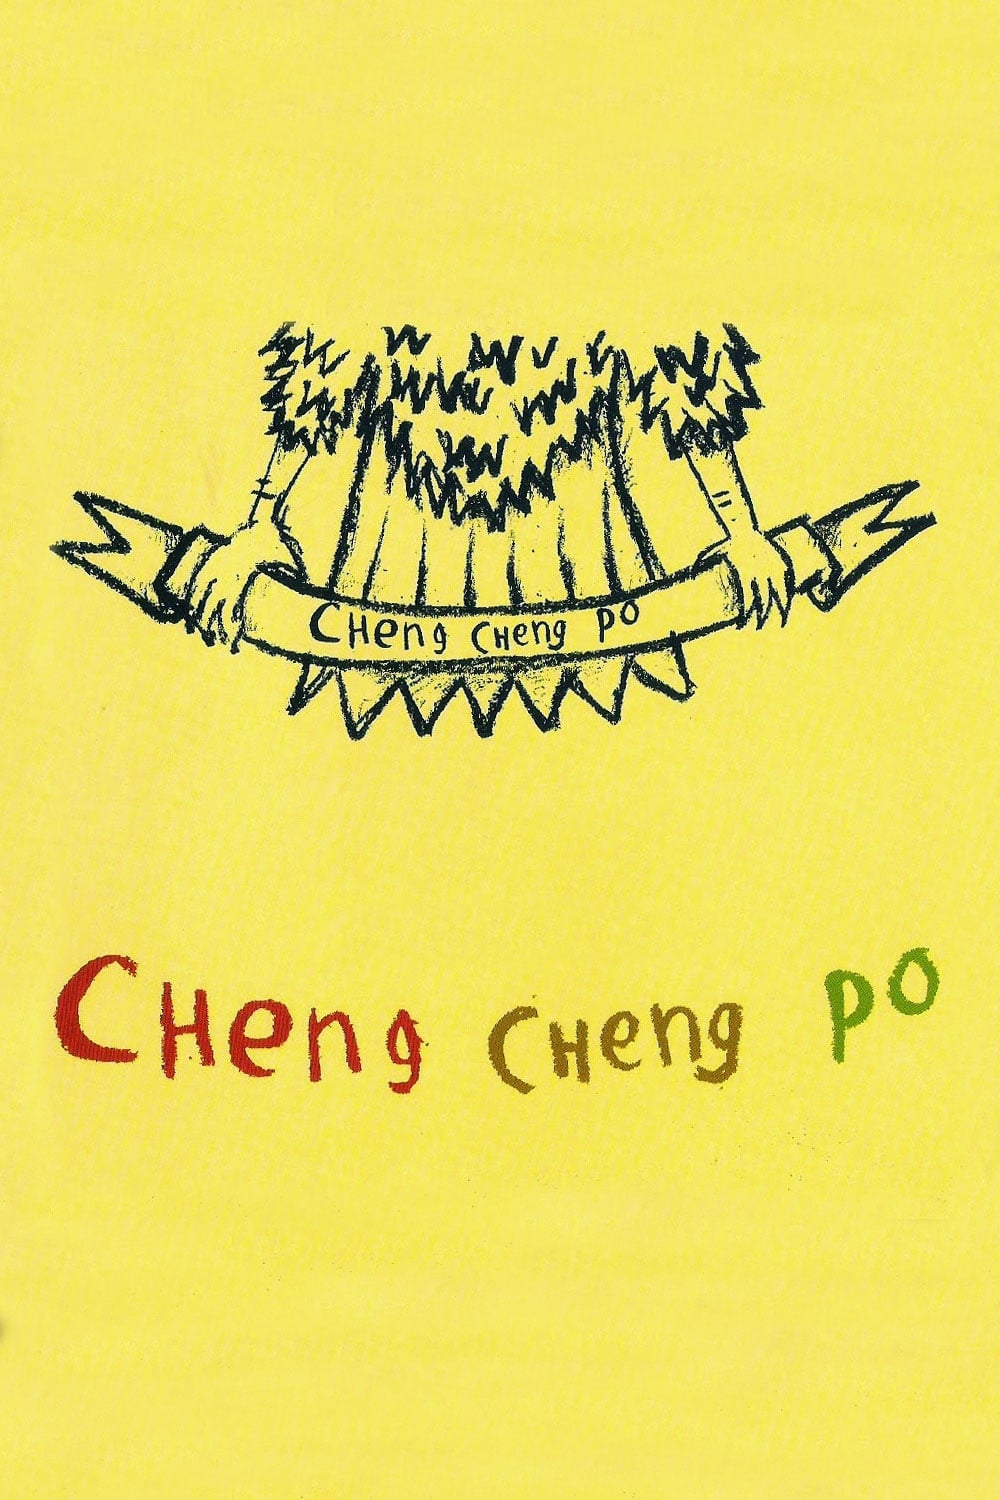 Cheng Cheng Po